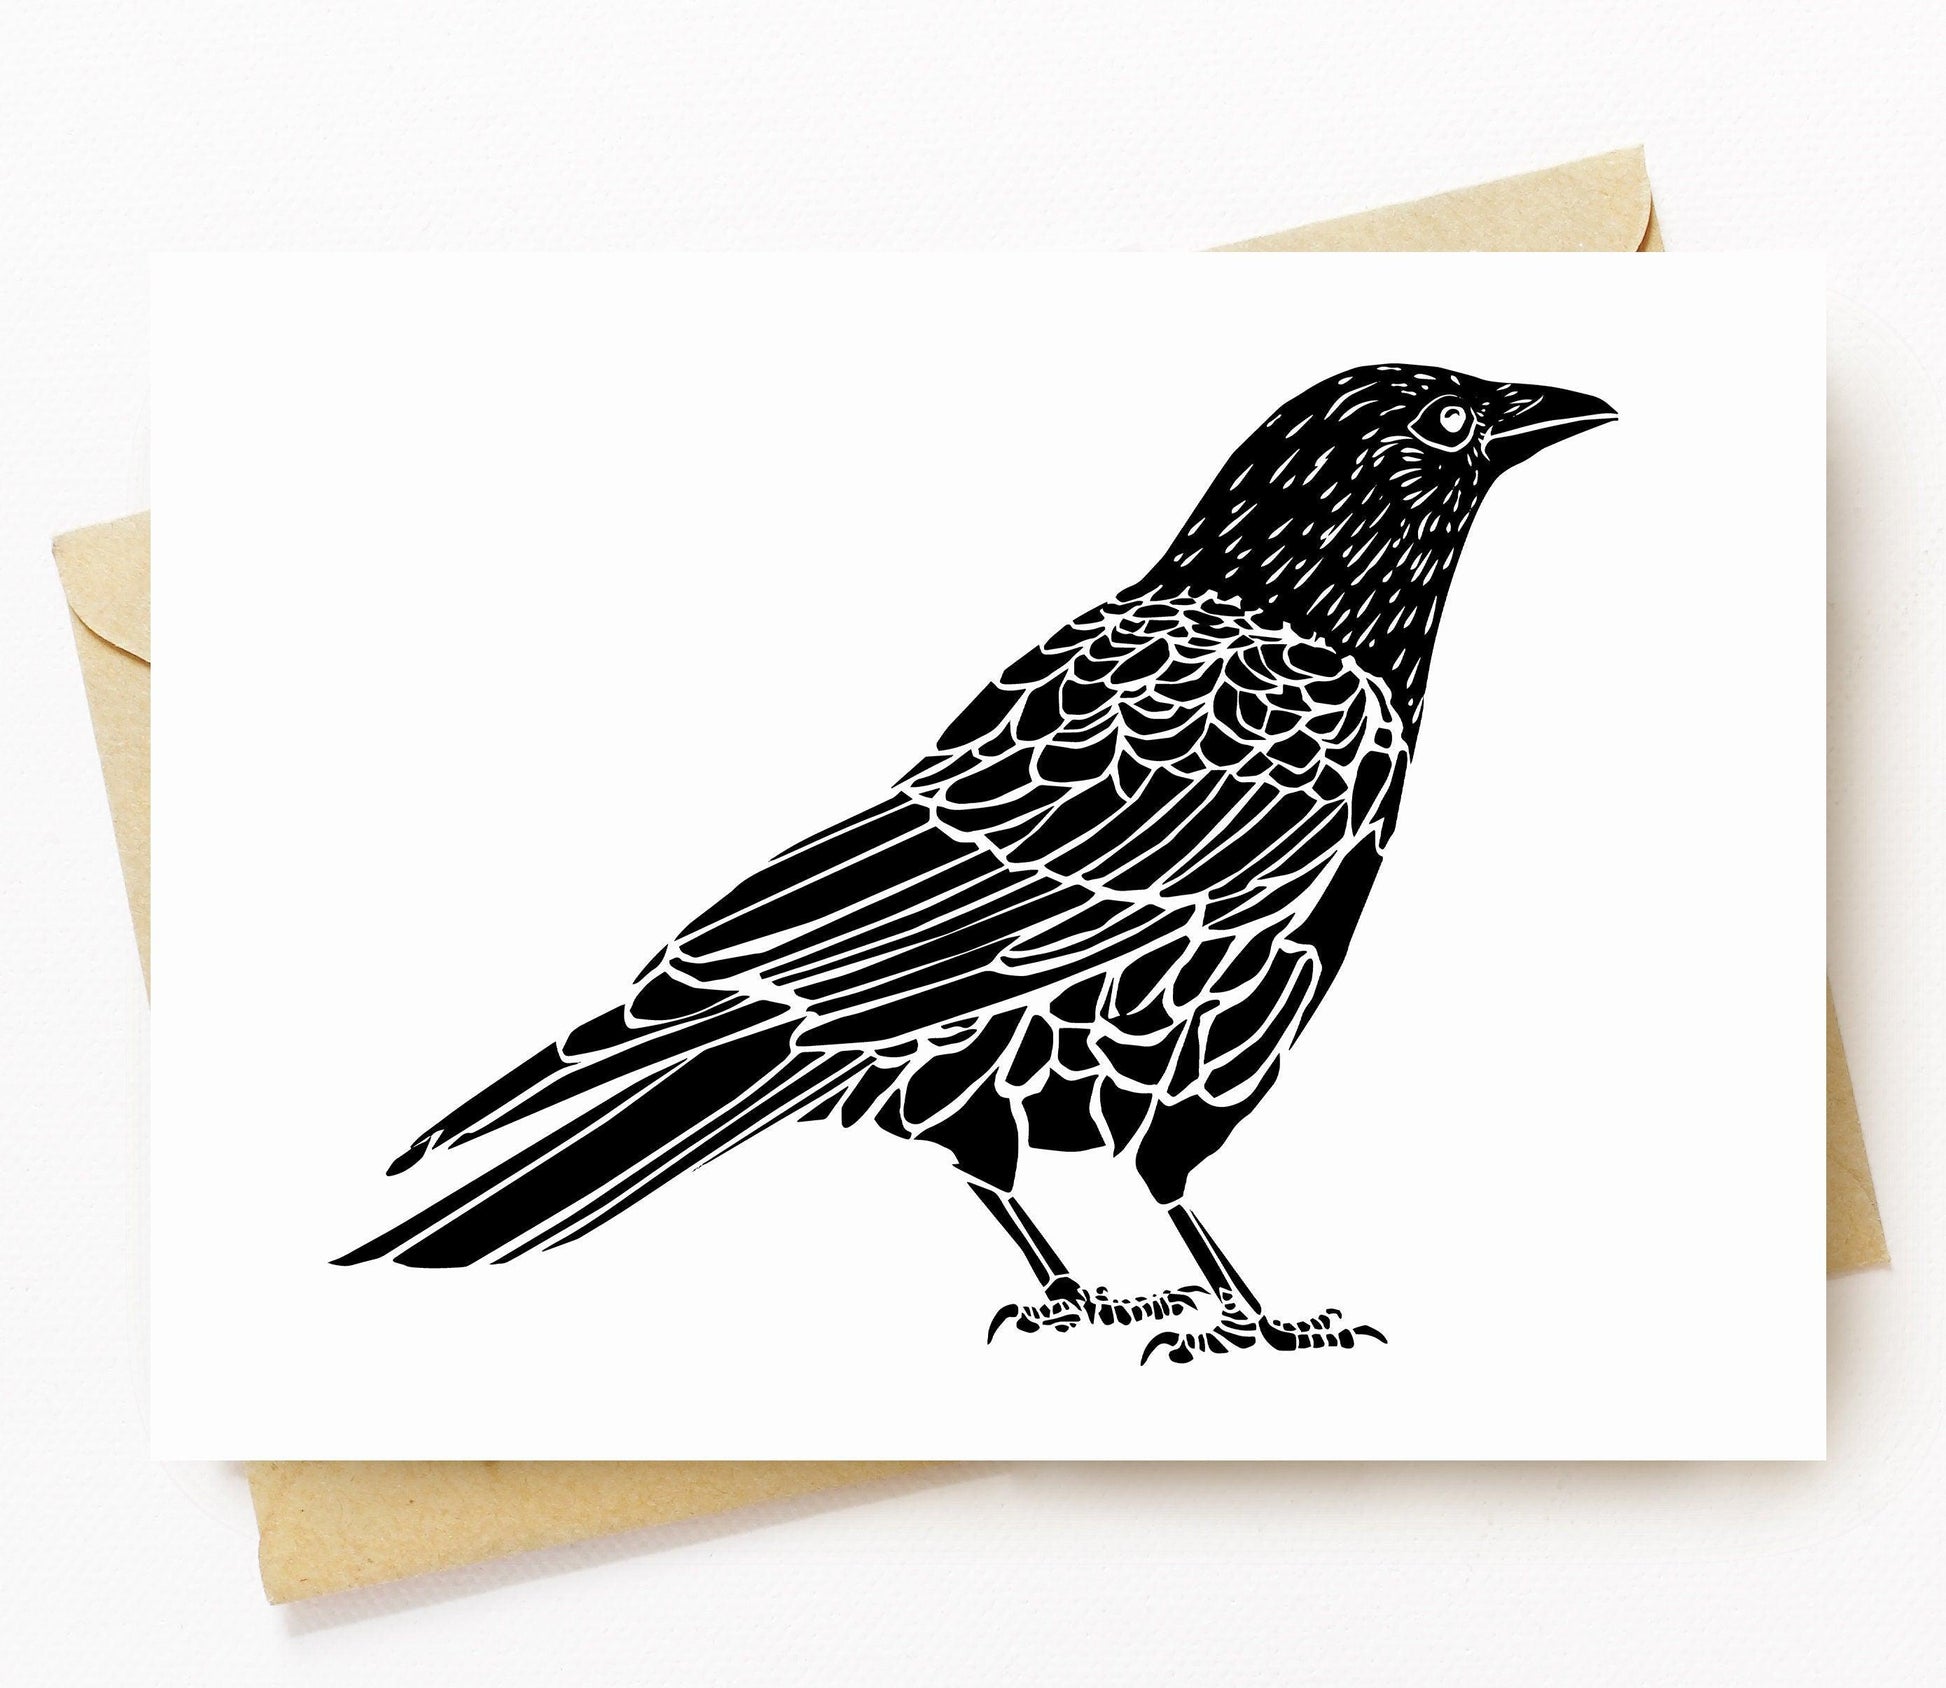 BellavanceInk: Greeting Card With Crow Wood Cut Style Illustration 5 x 7 Inches - BellavanceInk